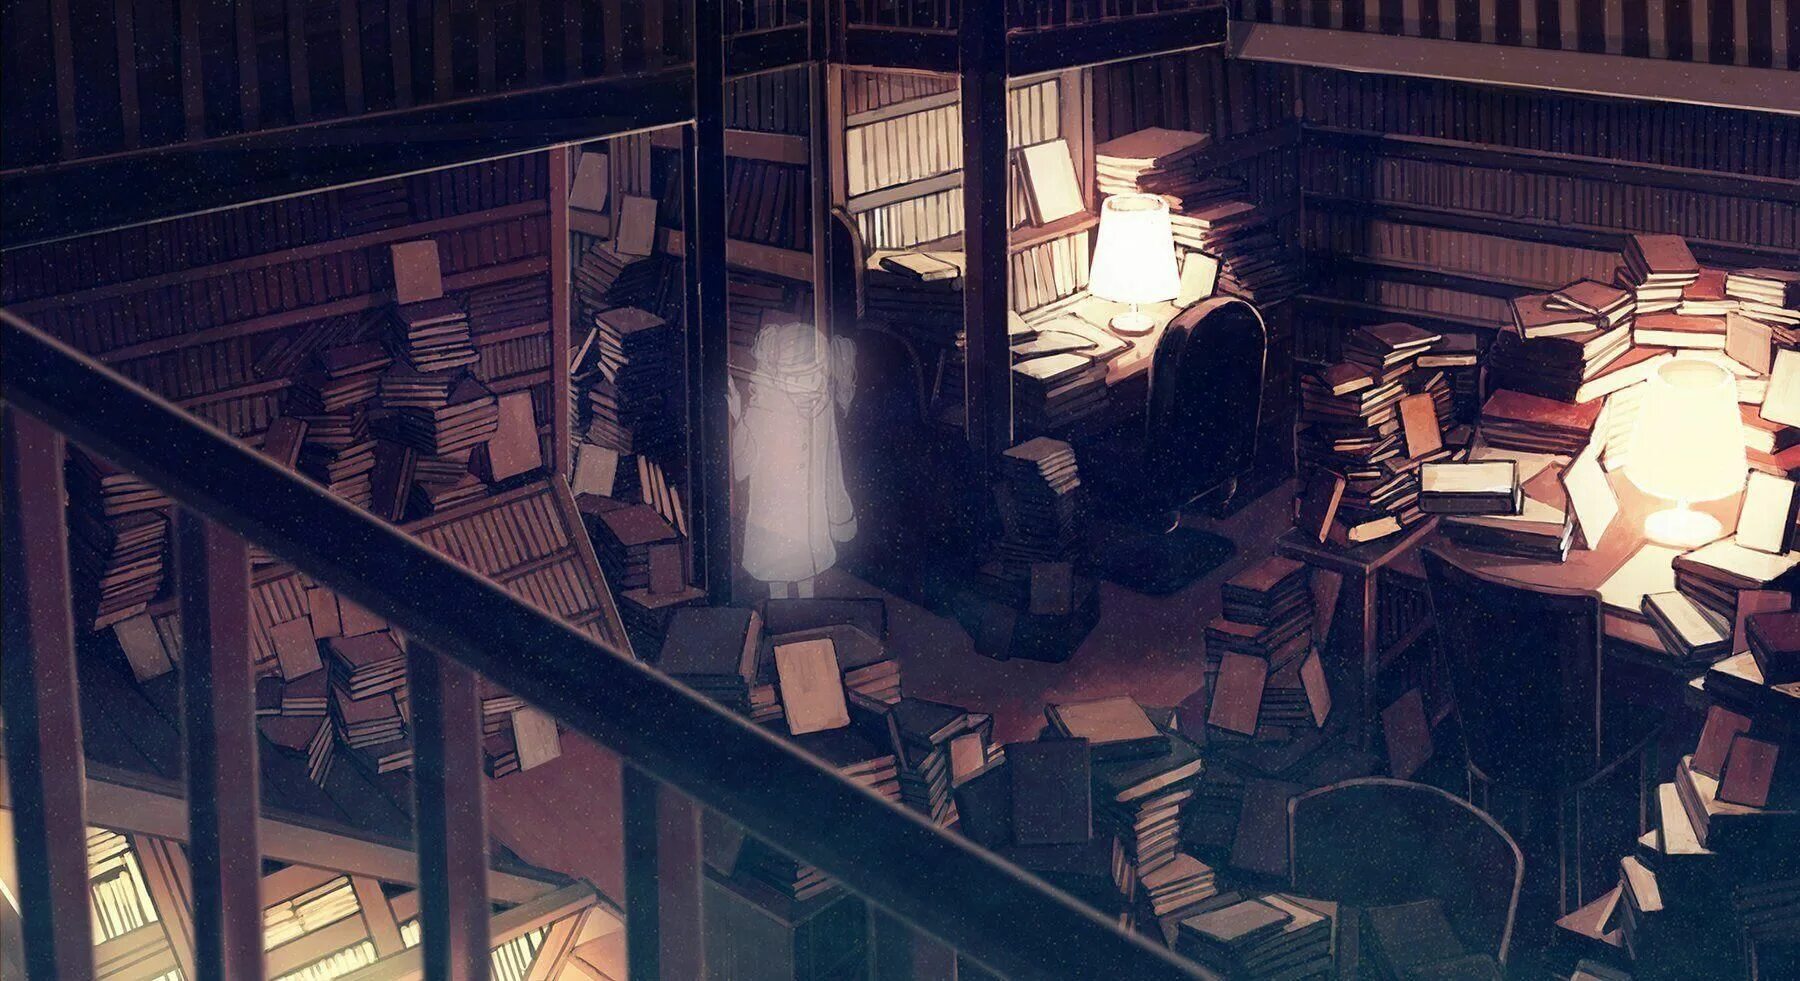 Сказка о библиотеке ночью. Библиотека арт. Библиотека фон.